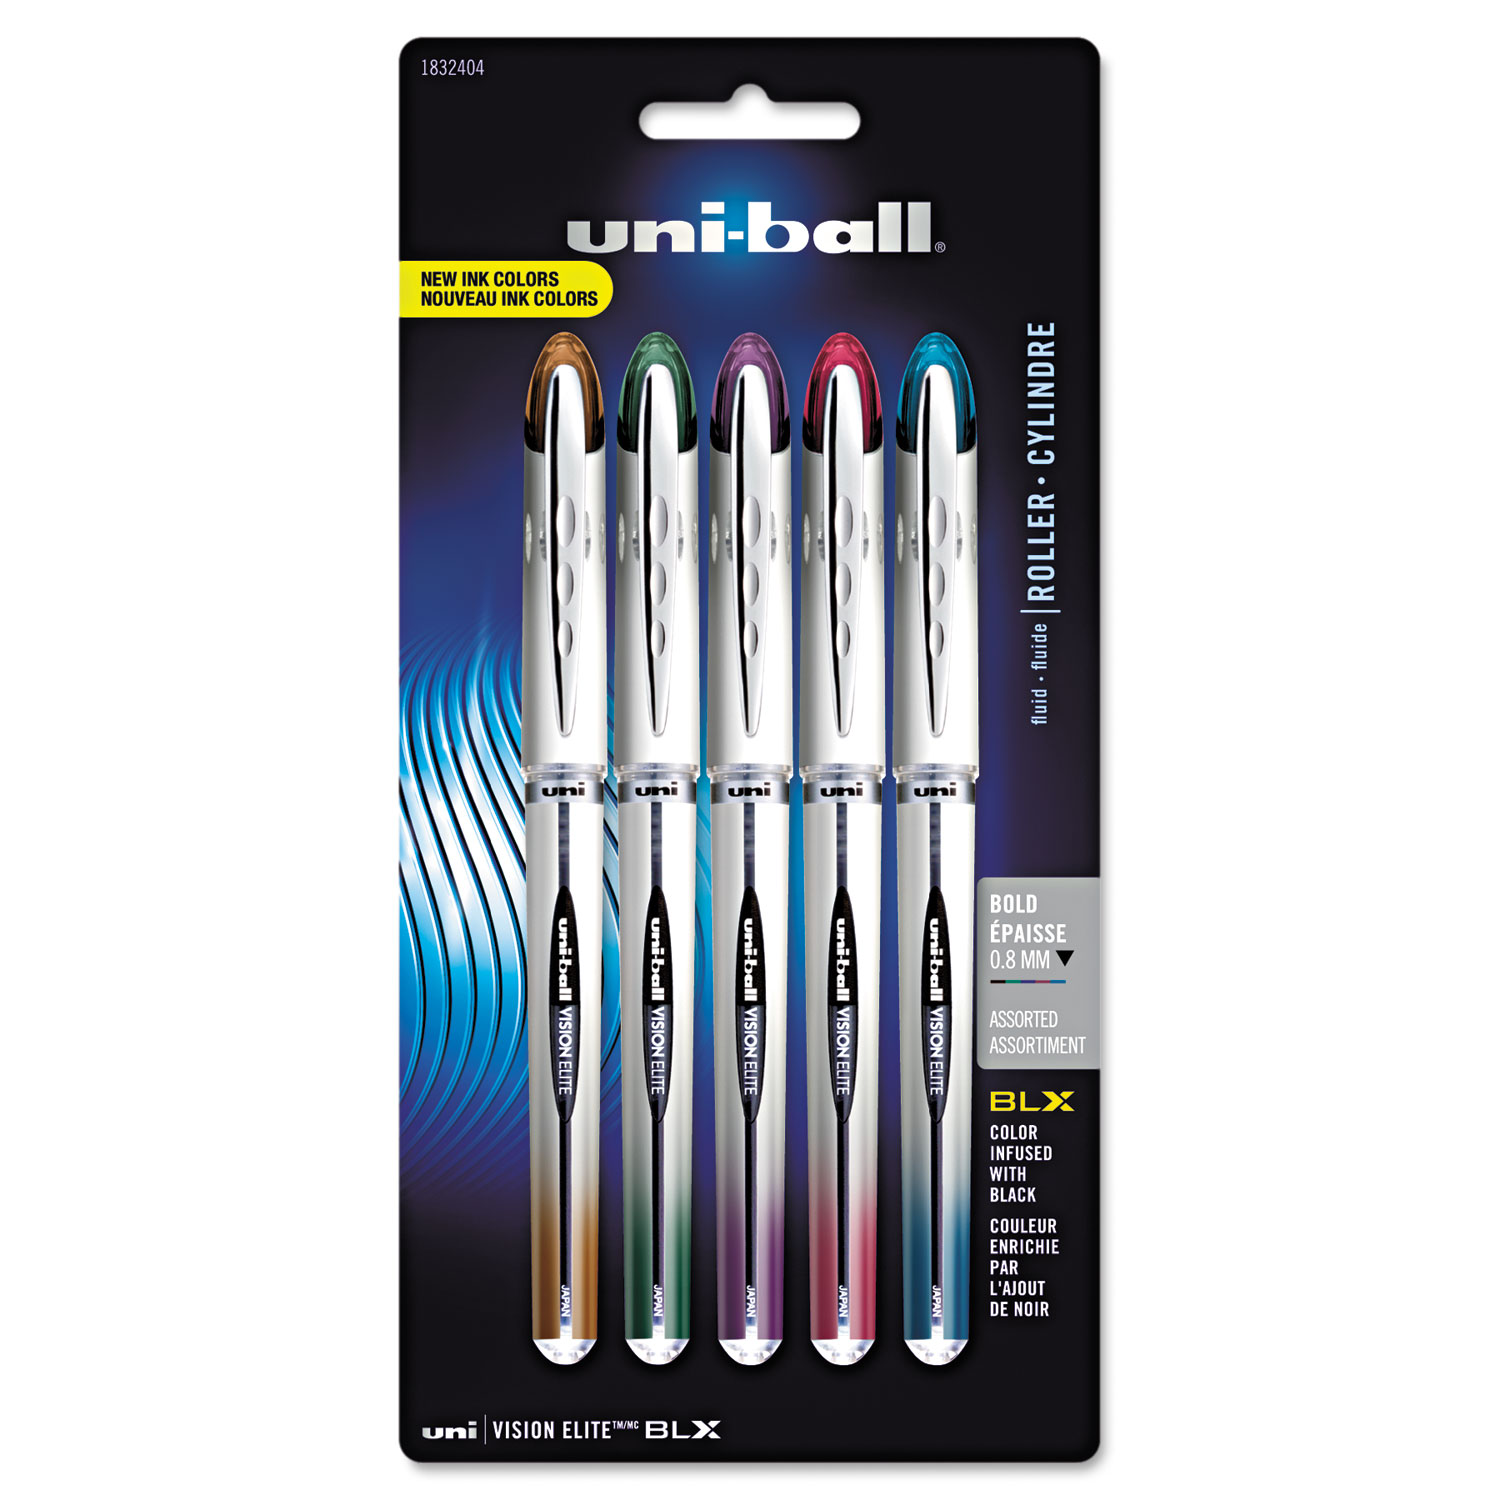  uni-ball 1832404 VISION ELITE BLX Series Stick Roller Ball Pen, 0.8mm, Assorted Ink/Barrel, 5/Pack (UBC1832404) 